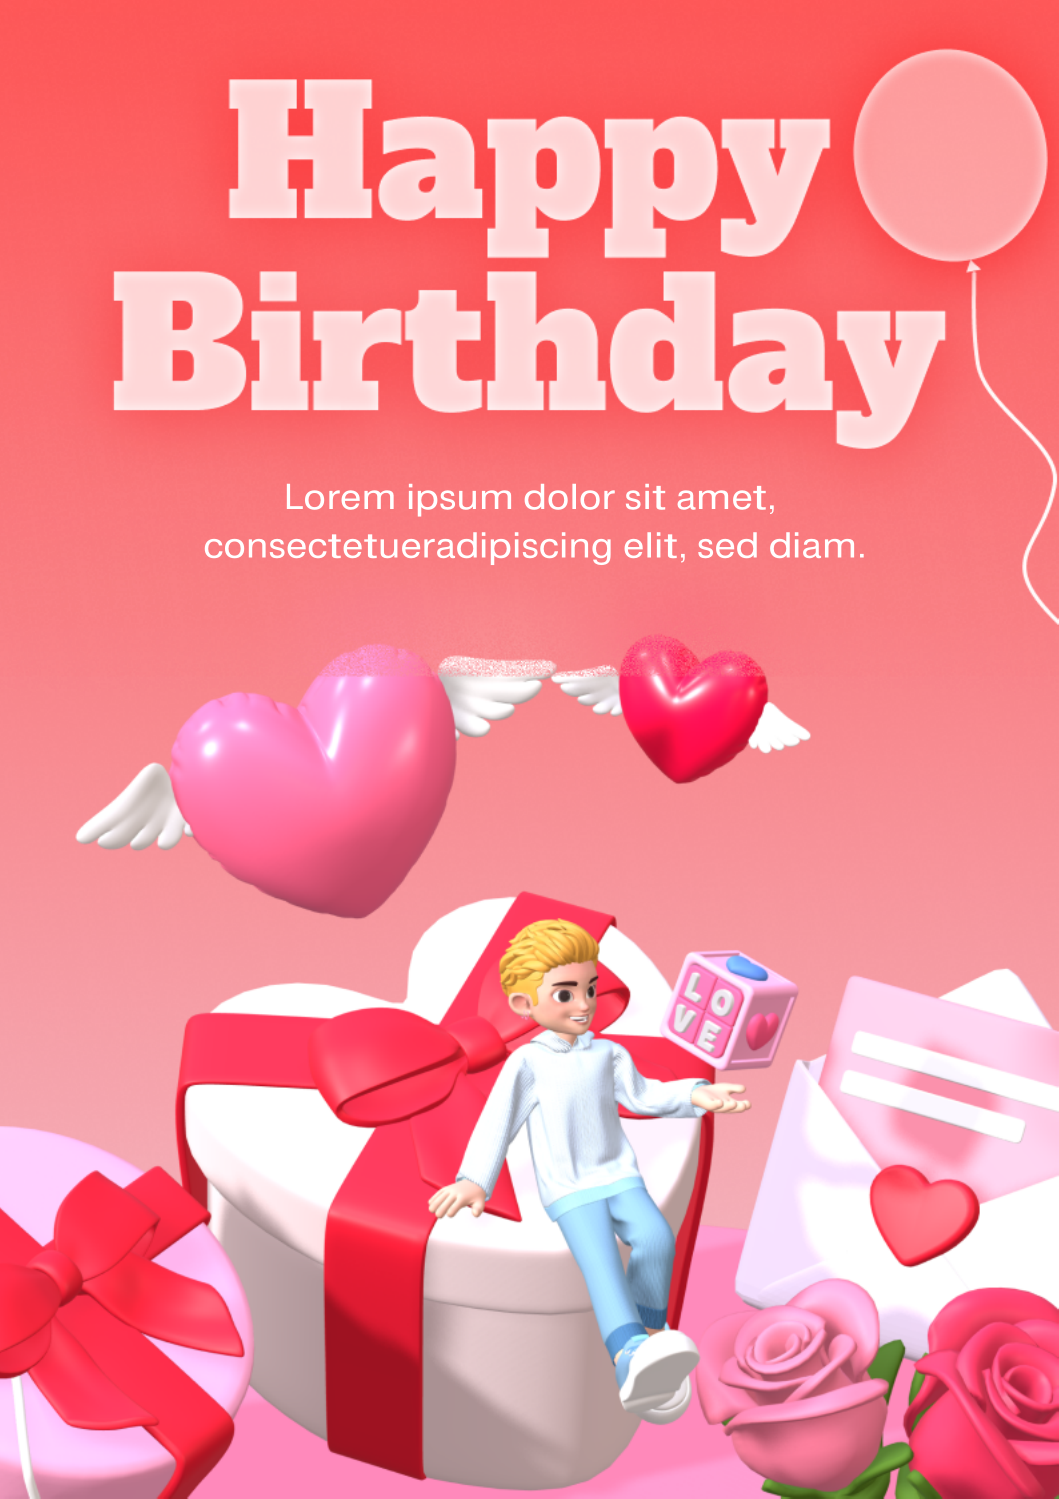 Birthday wishes for girlfriend 1